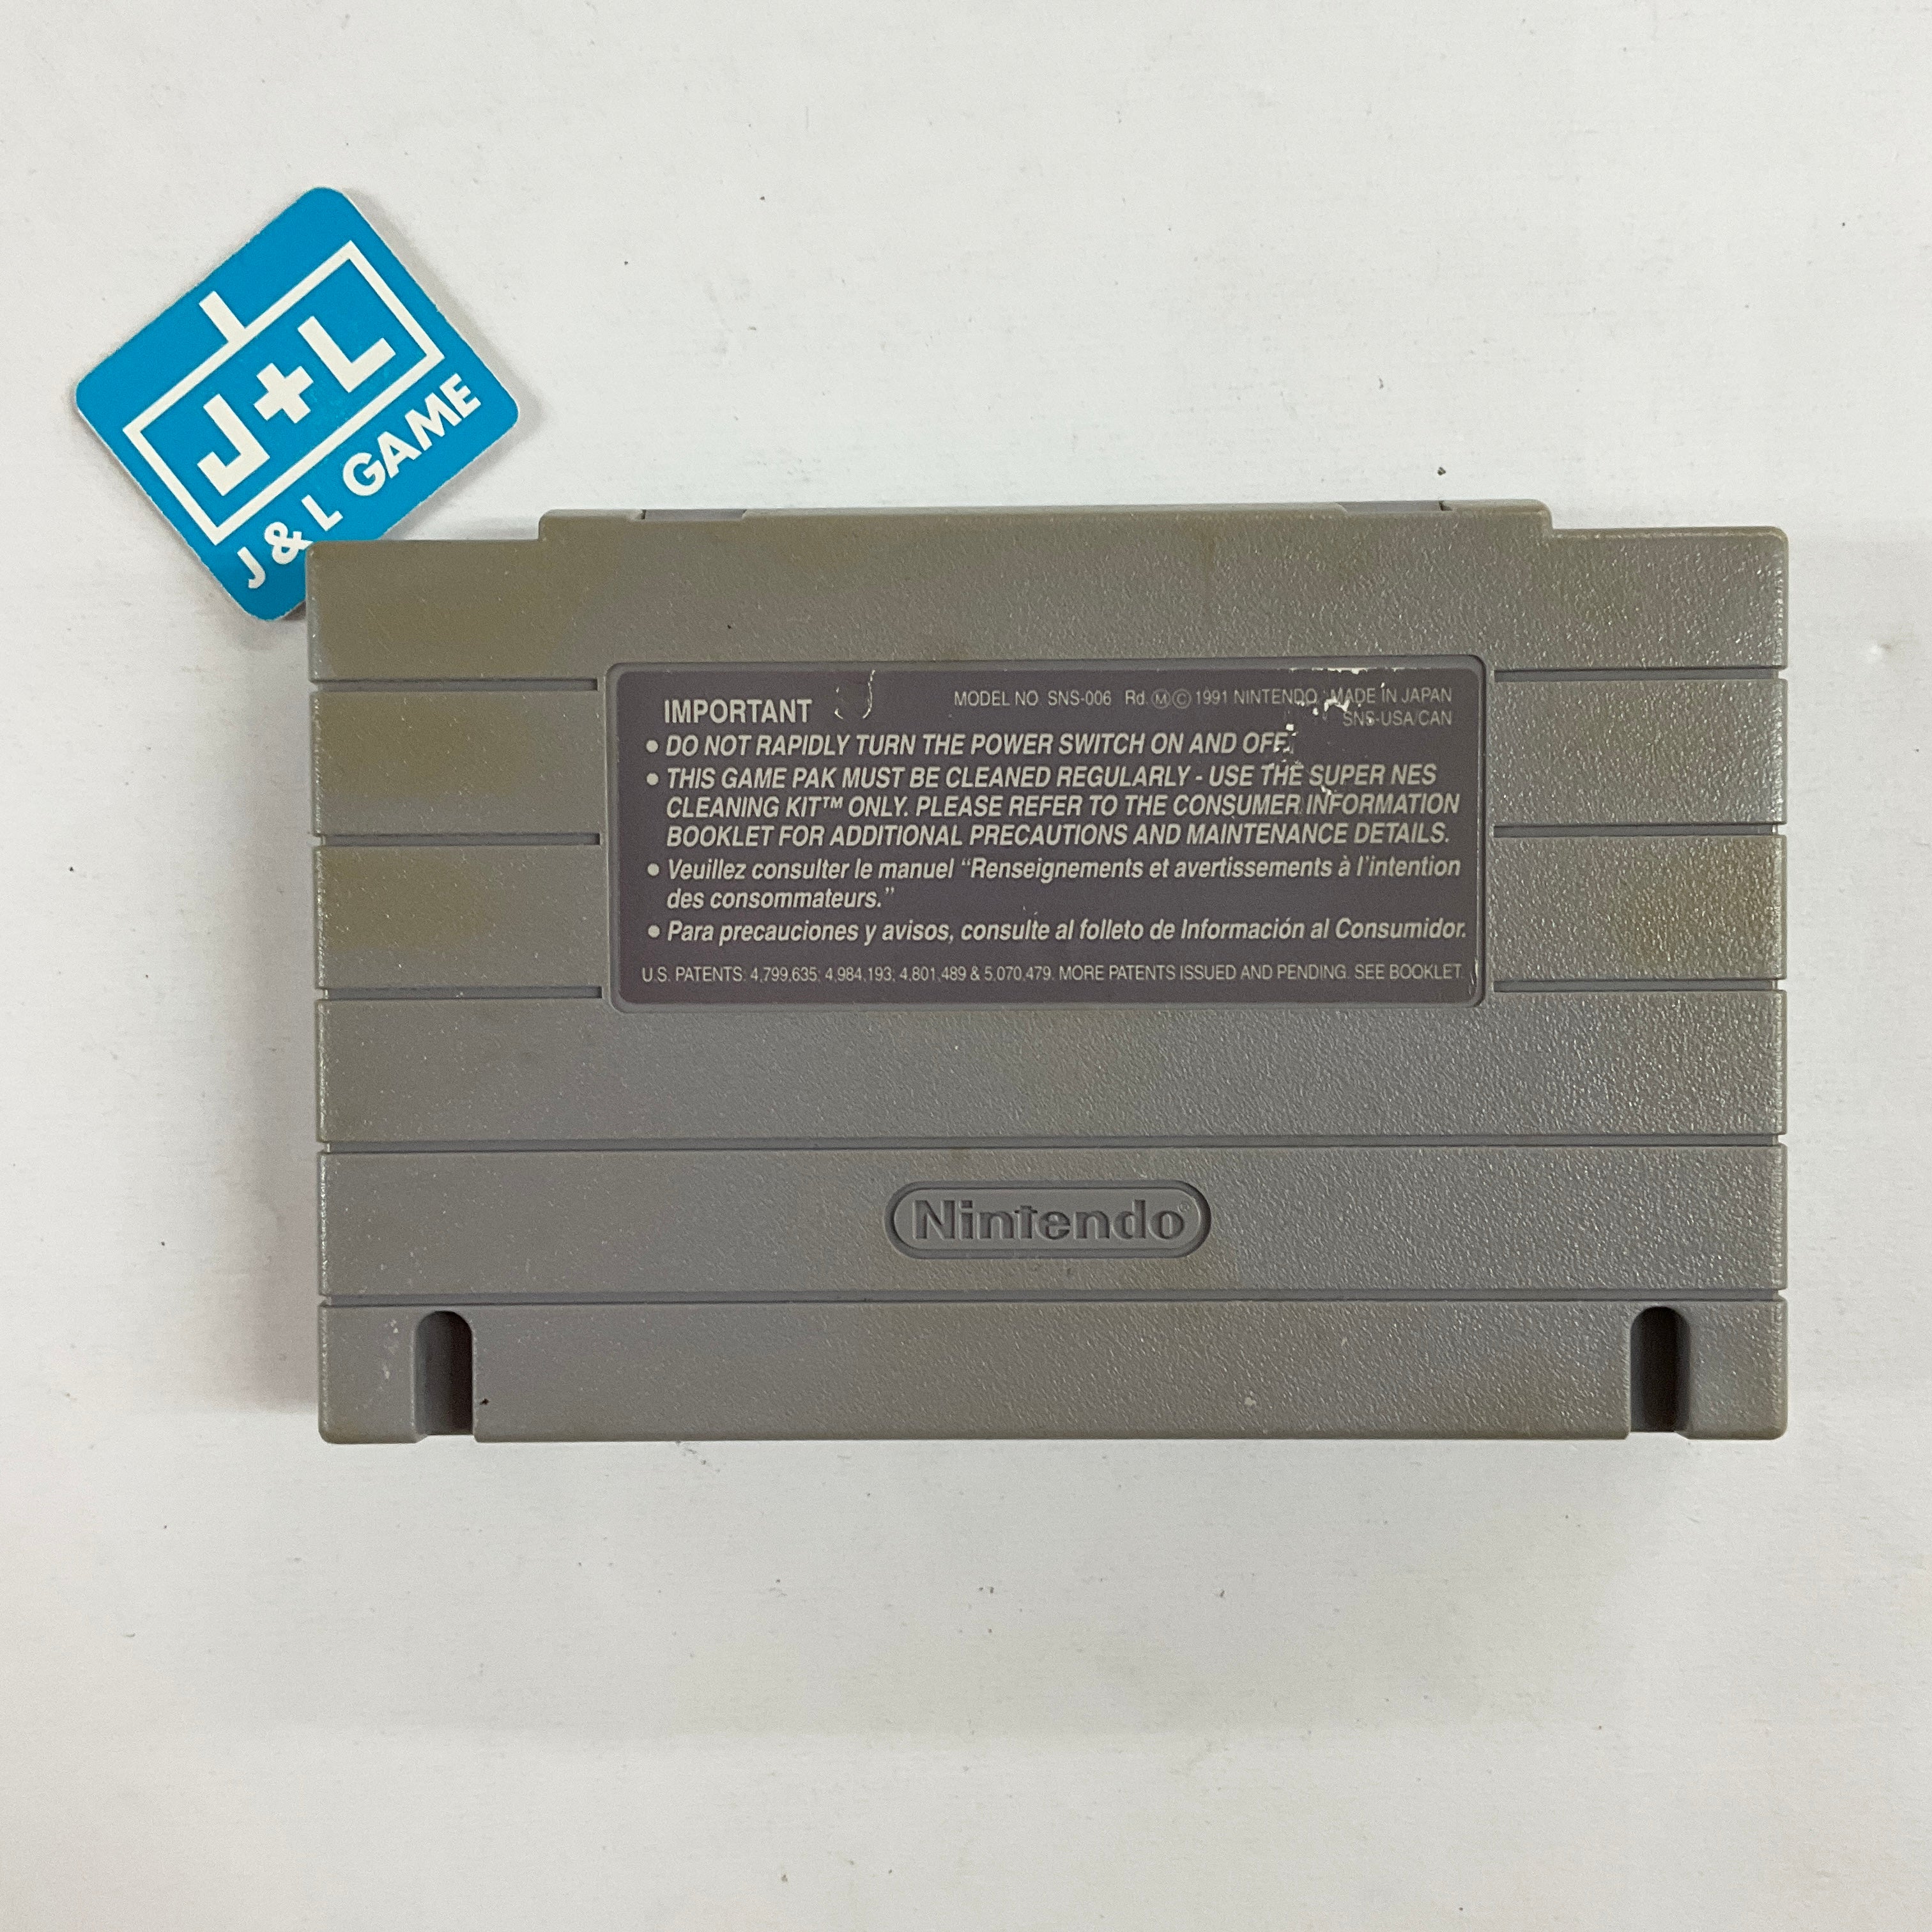 Super Mario World (Player's Choice) - (SNES) Super Nintendo [Pre-Owned] Video Games Nintendo   